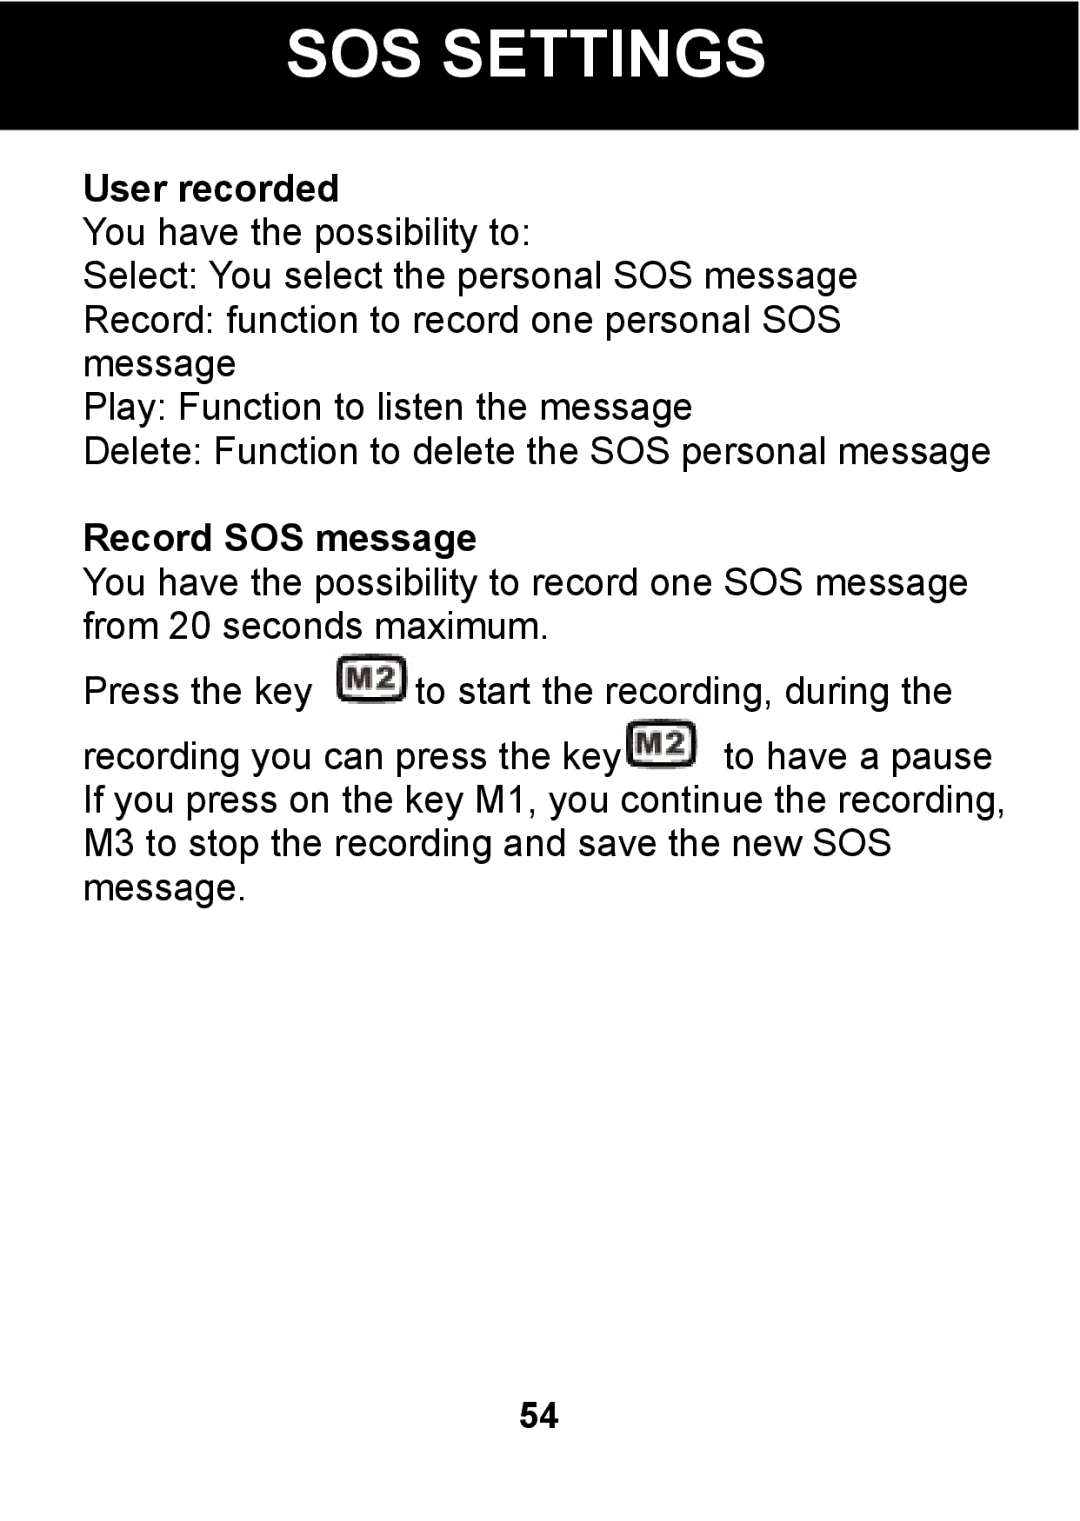 Pal/Pax PAL101 manual User recorded, Record SOS message 